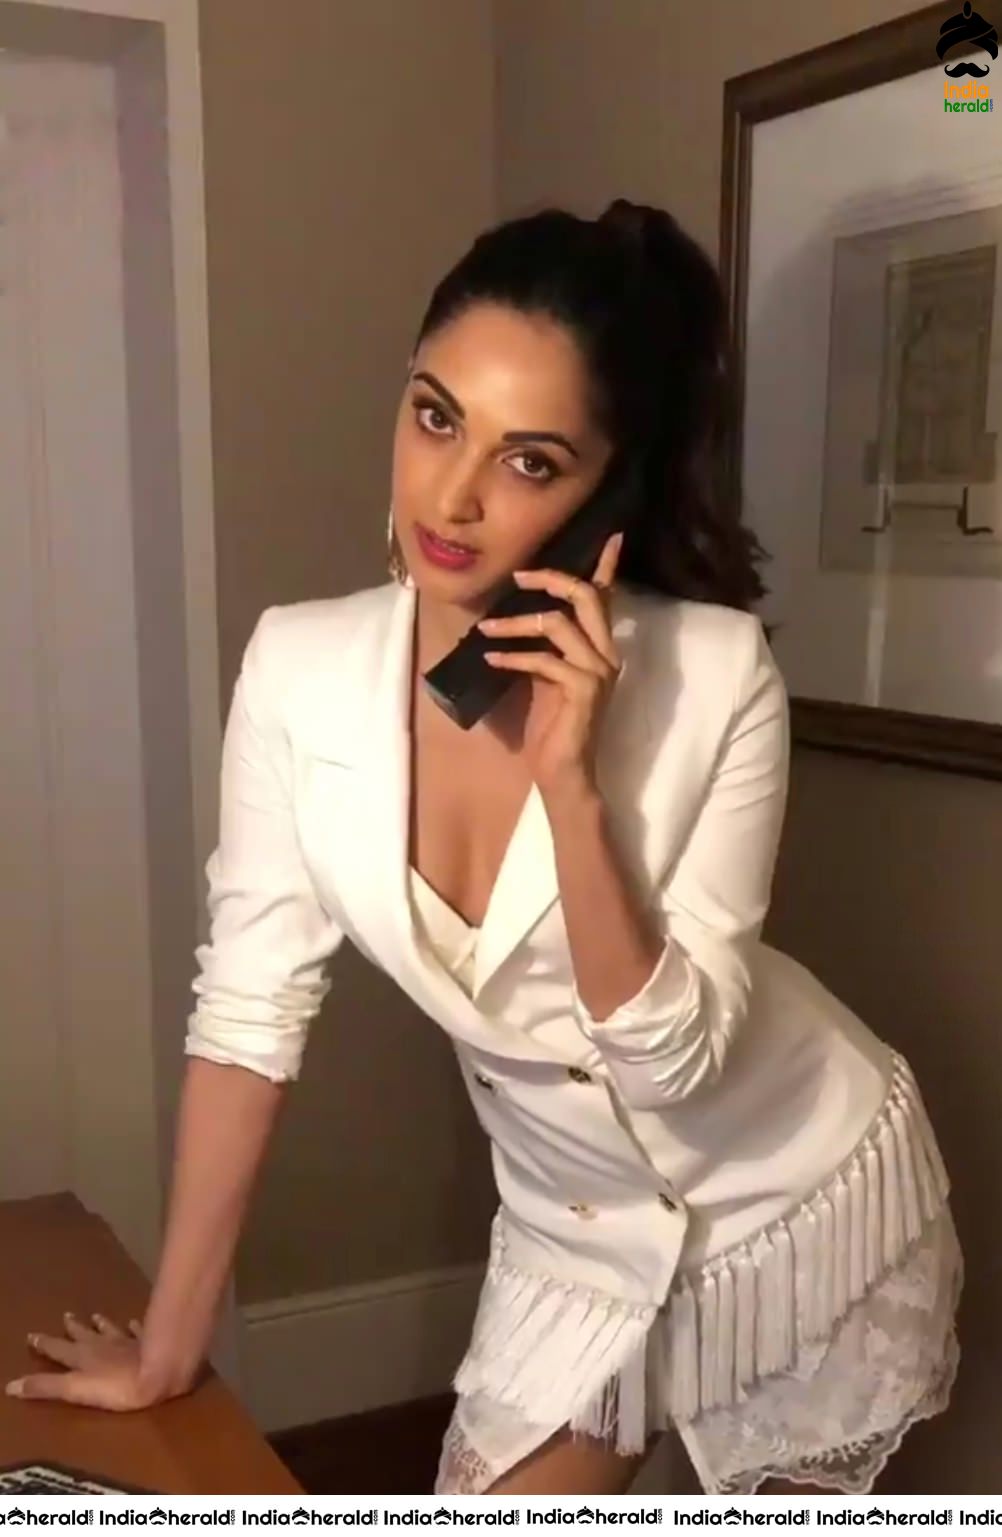 Kiara Advani Unseen Hot Photoshoot Clicks like a Soft Porn Actress